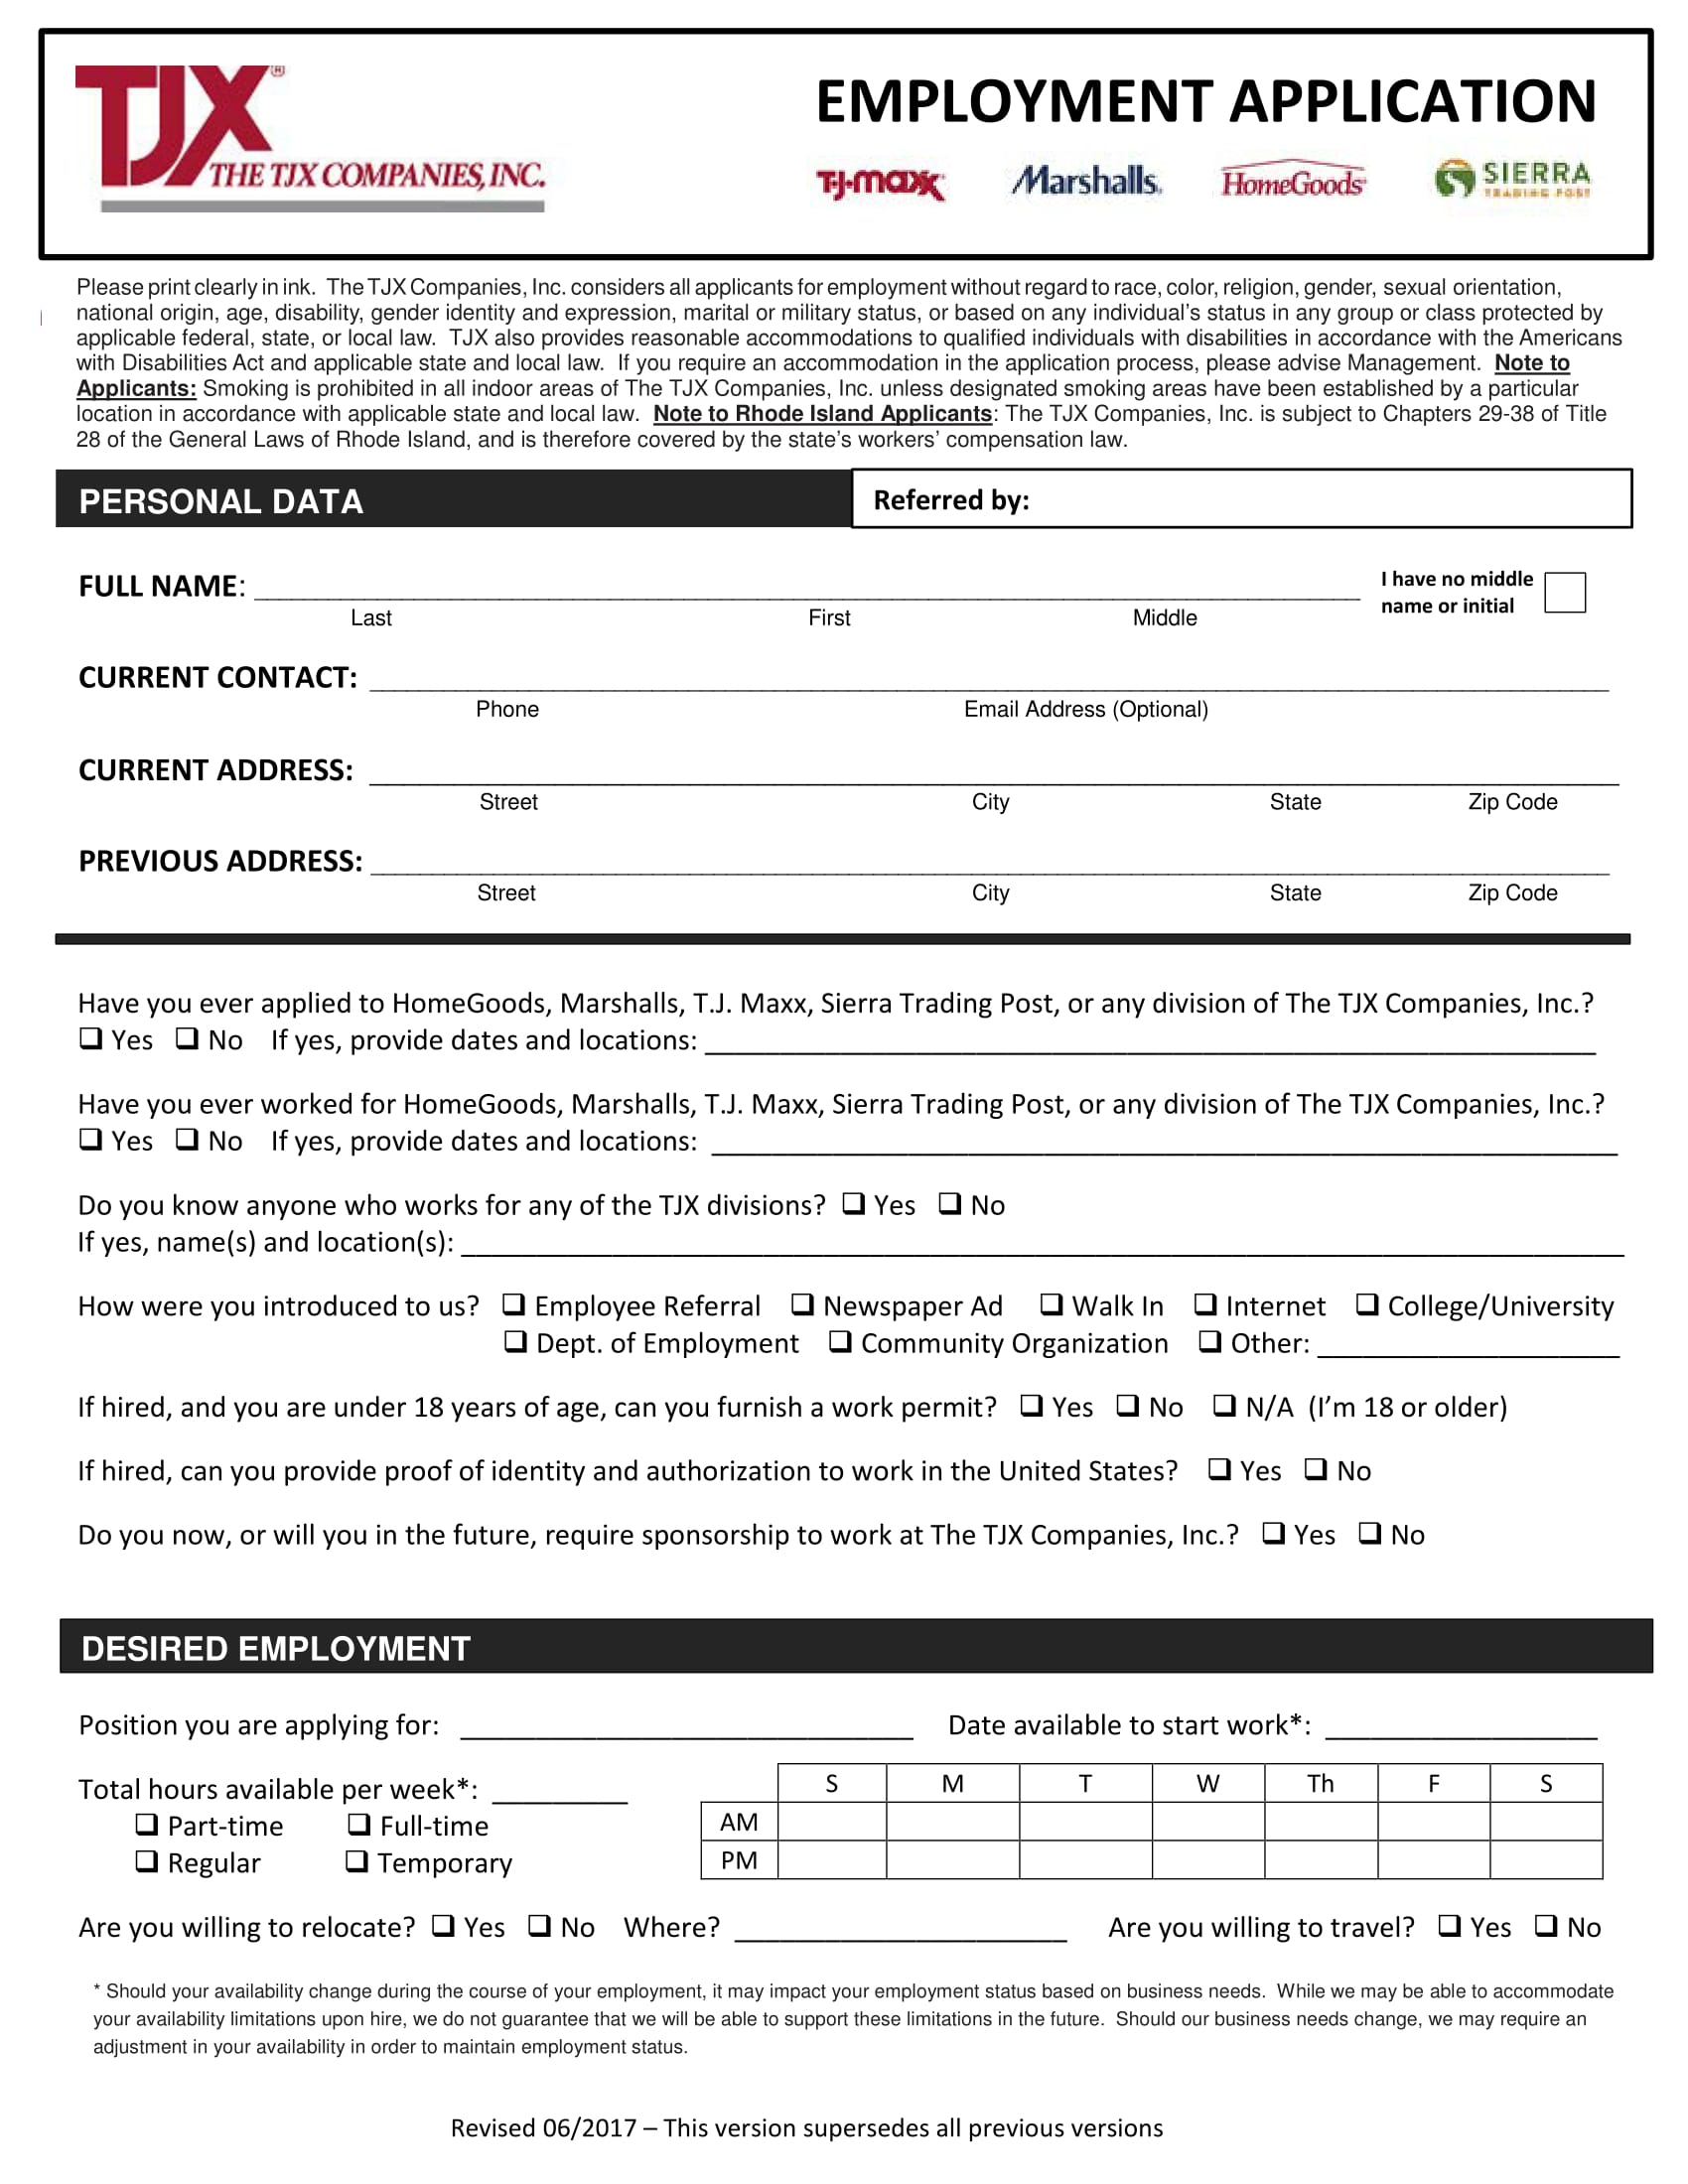 employment application form sample 1